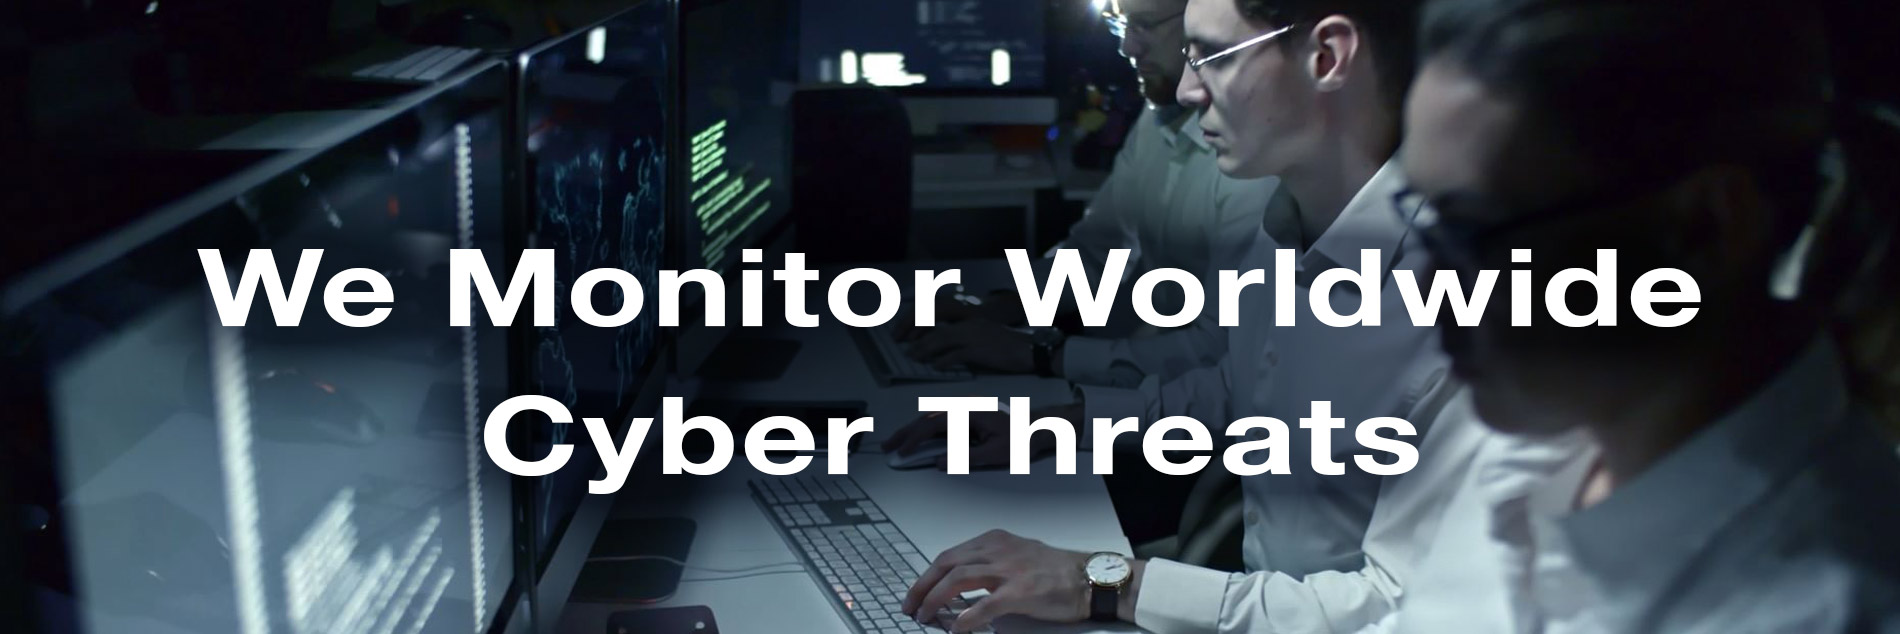 We Monitor Worldwide Cyber Threats